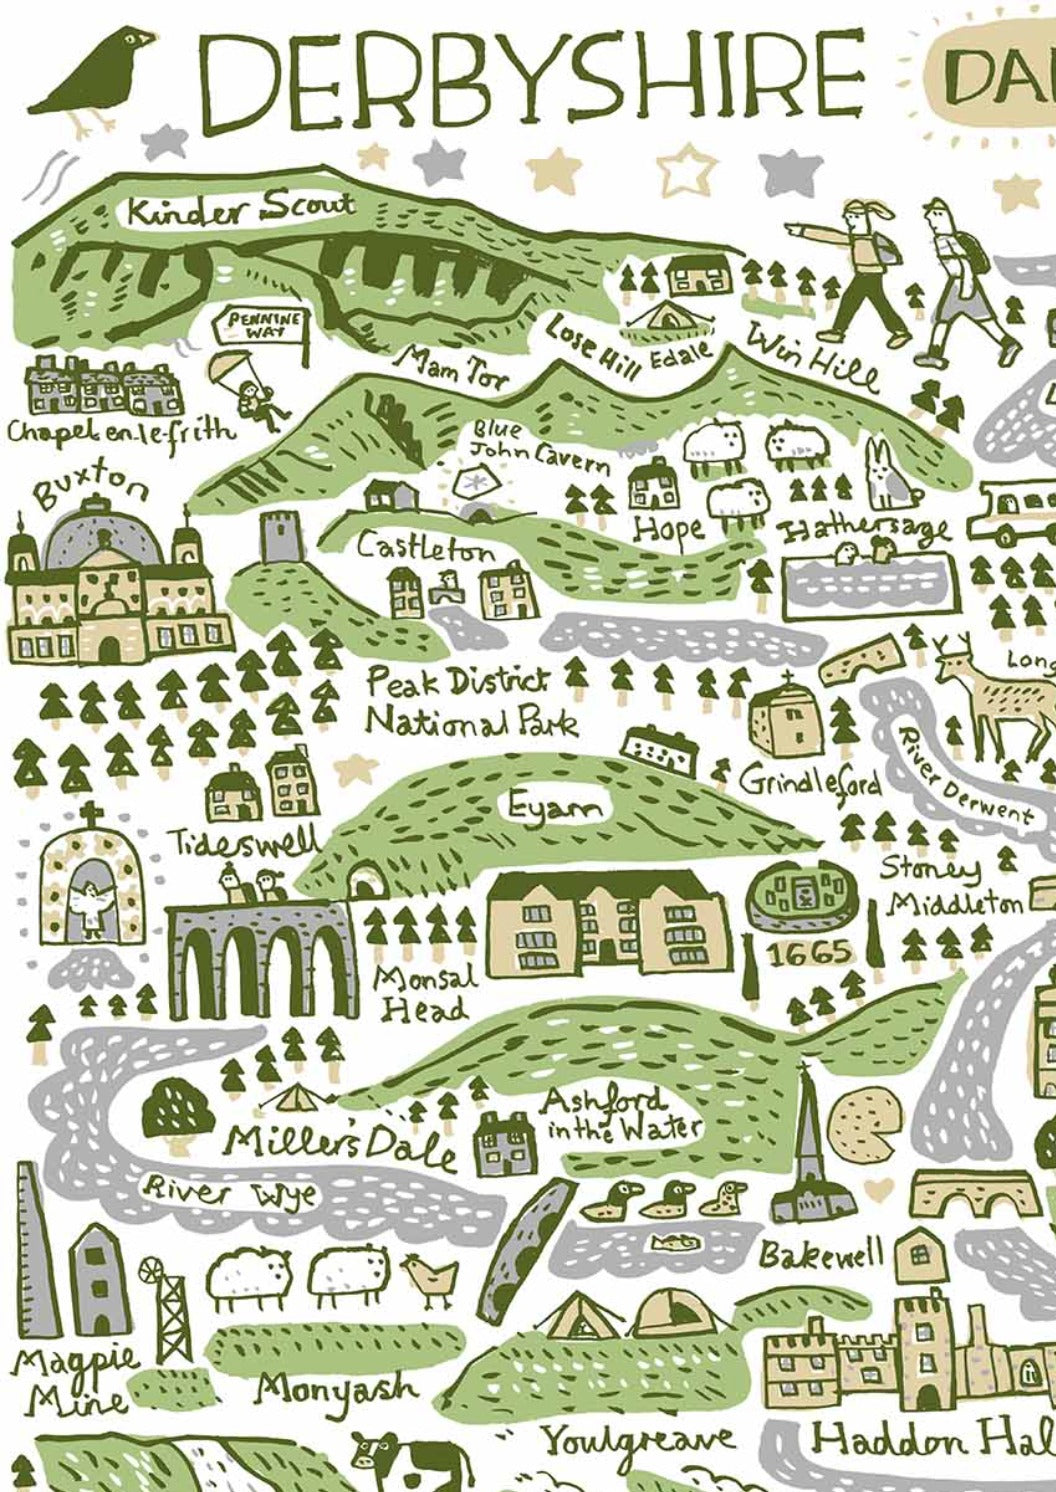 Derbyshire Dales Postcard - Julia Gash